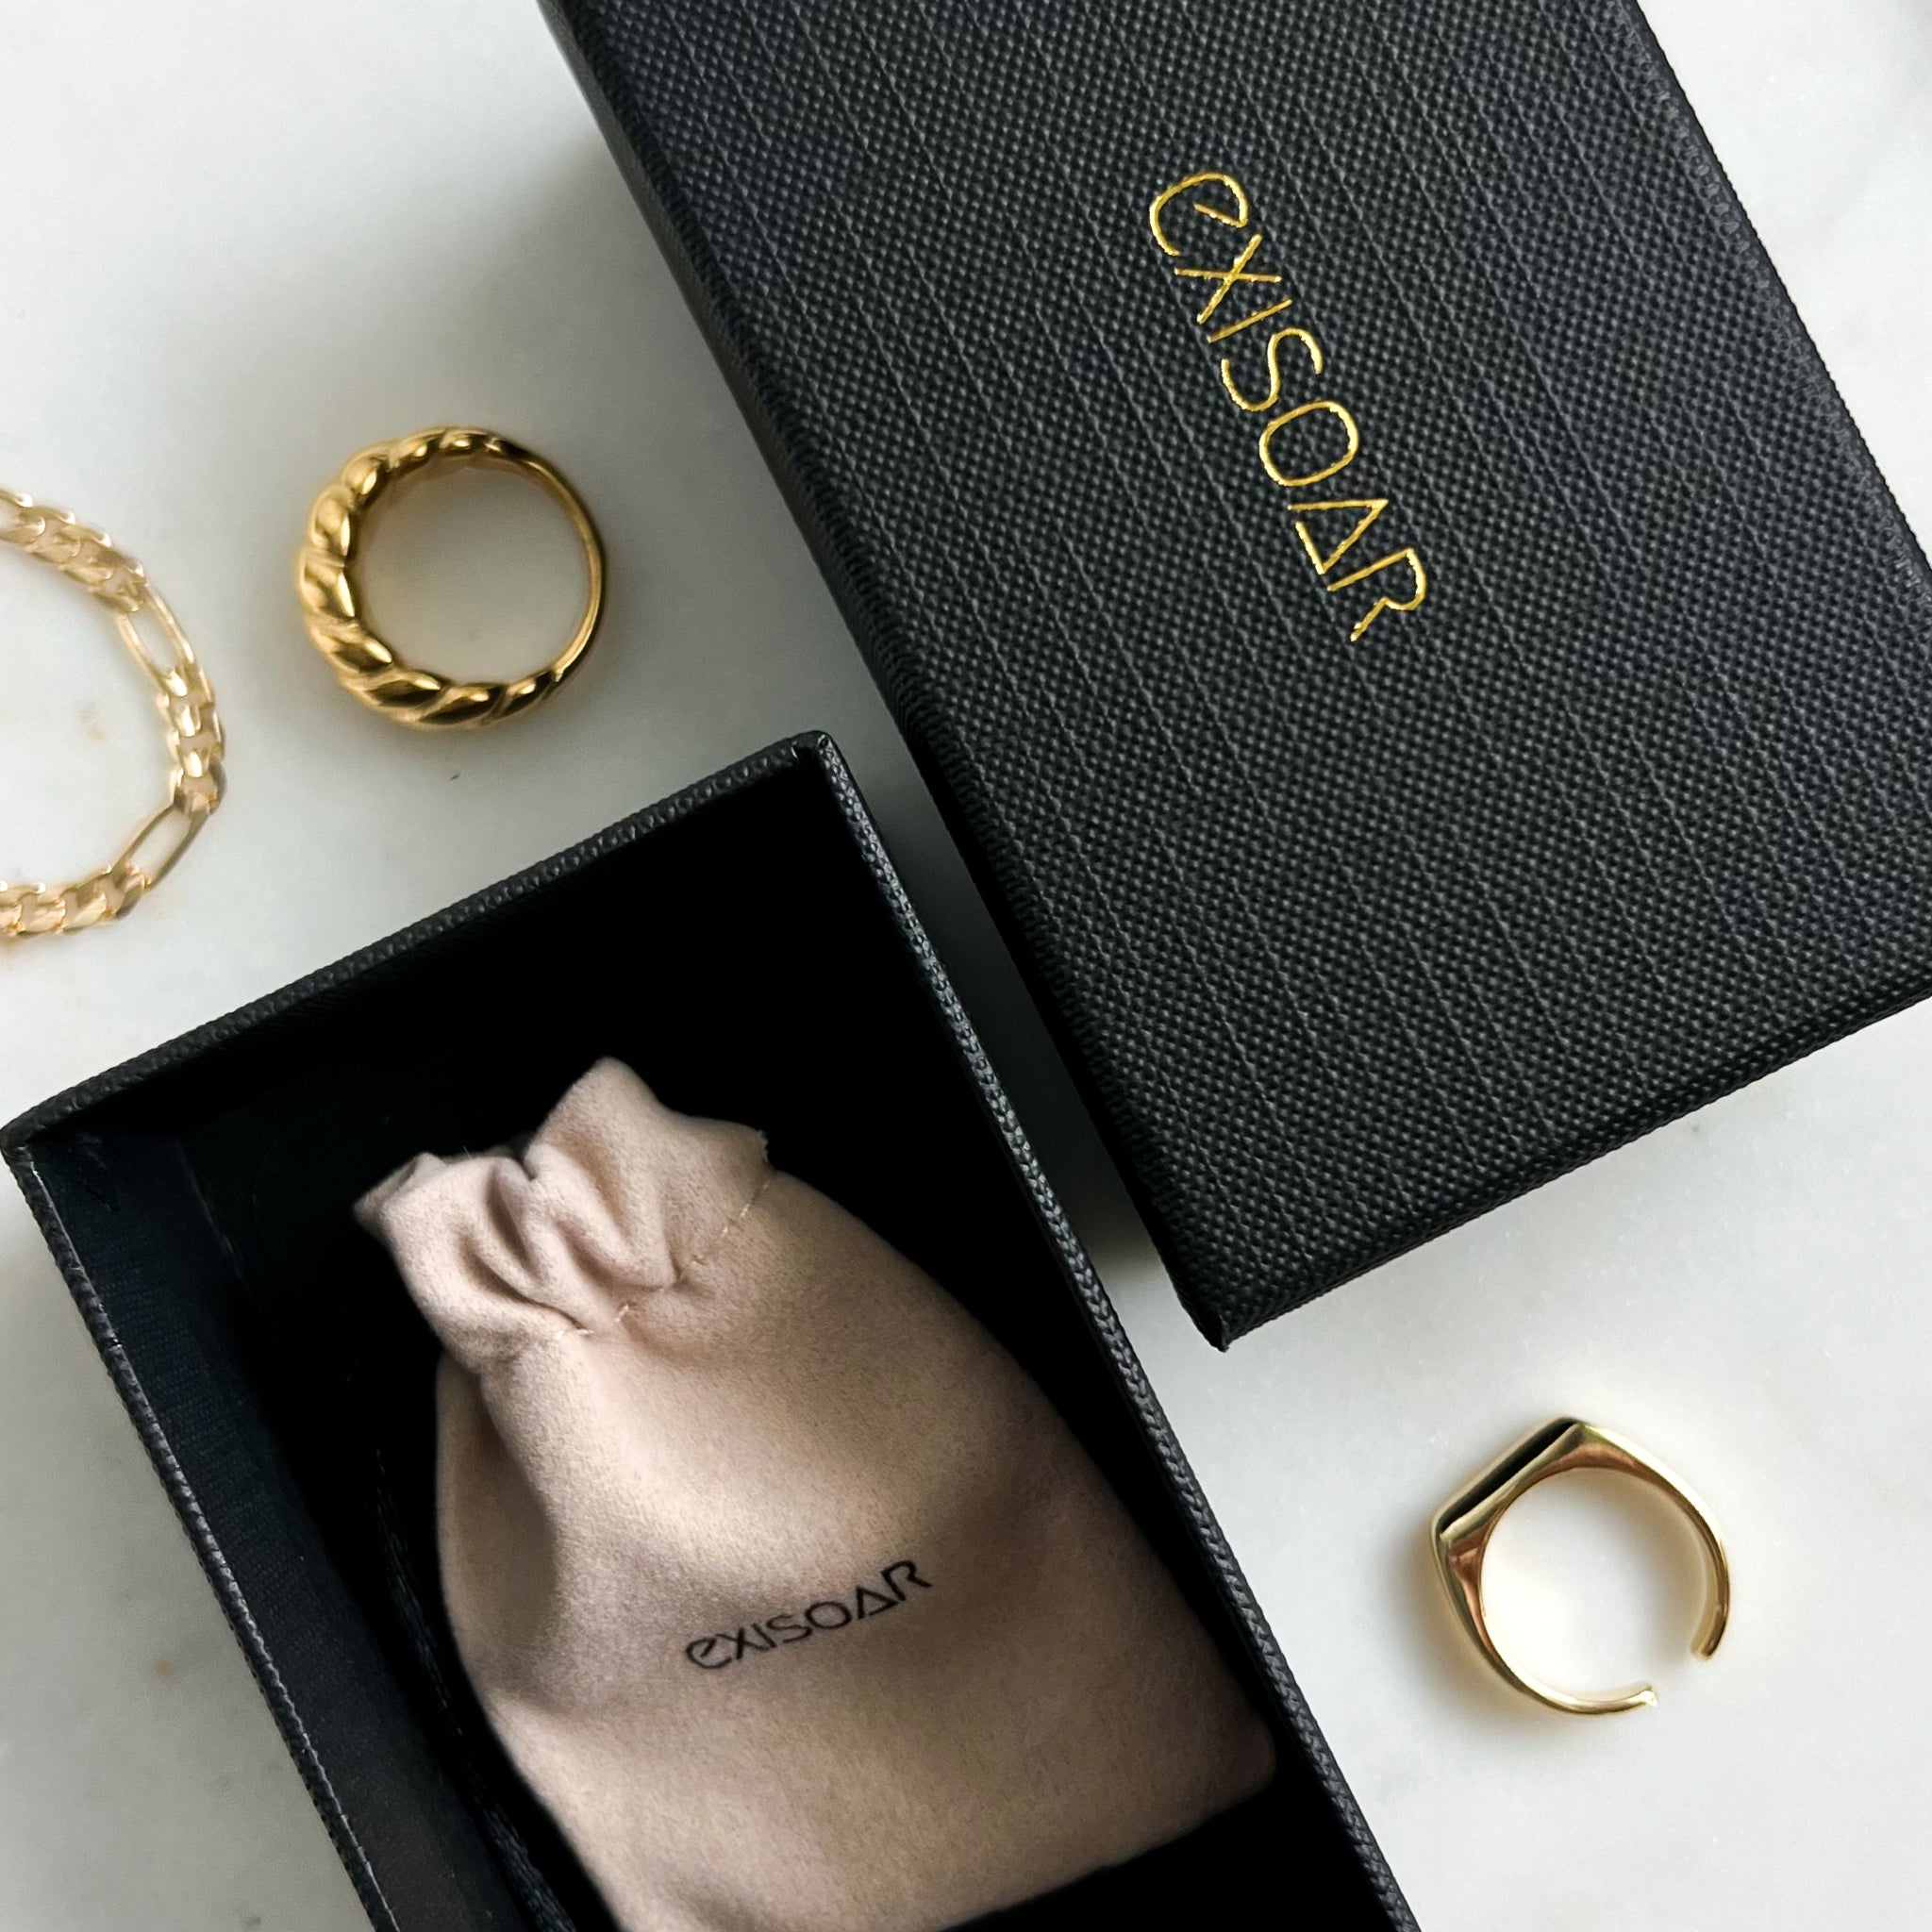 Cressida | Gold Plated Ring